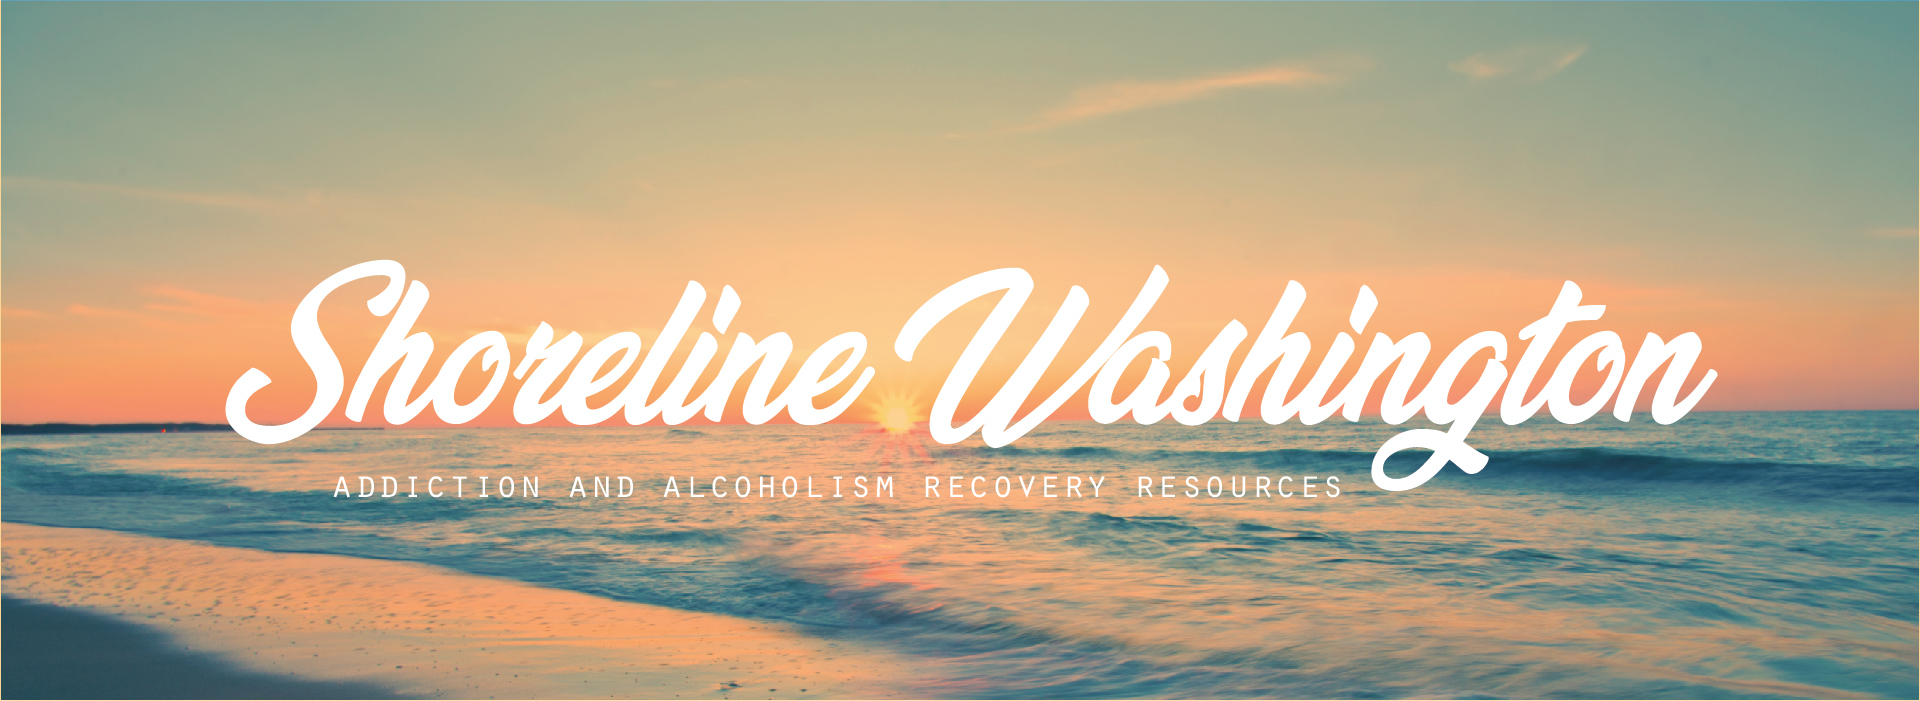 Shoreline, Washington, addiction and alcoholism recovery resources